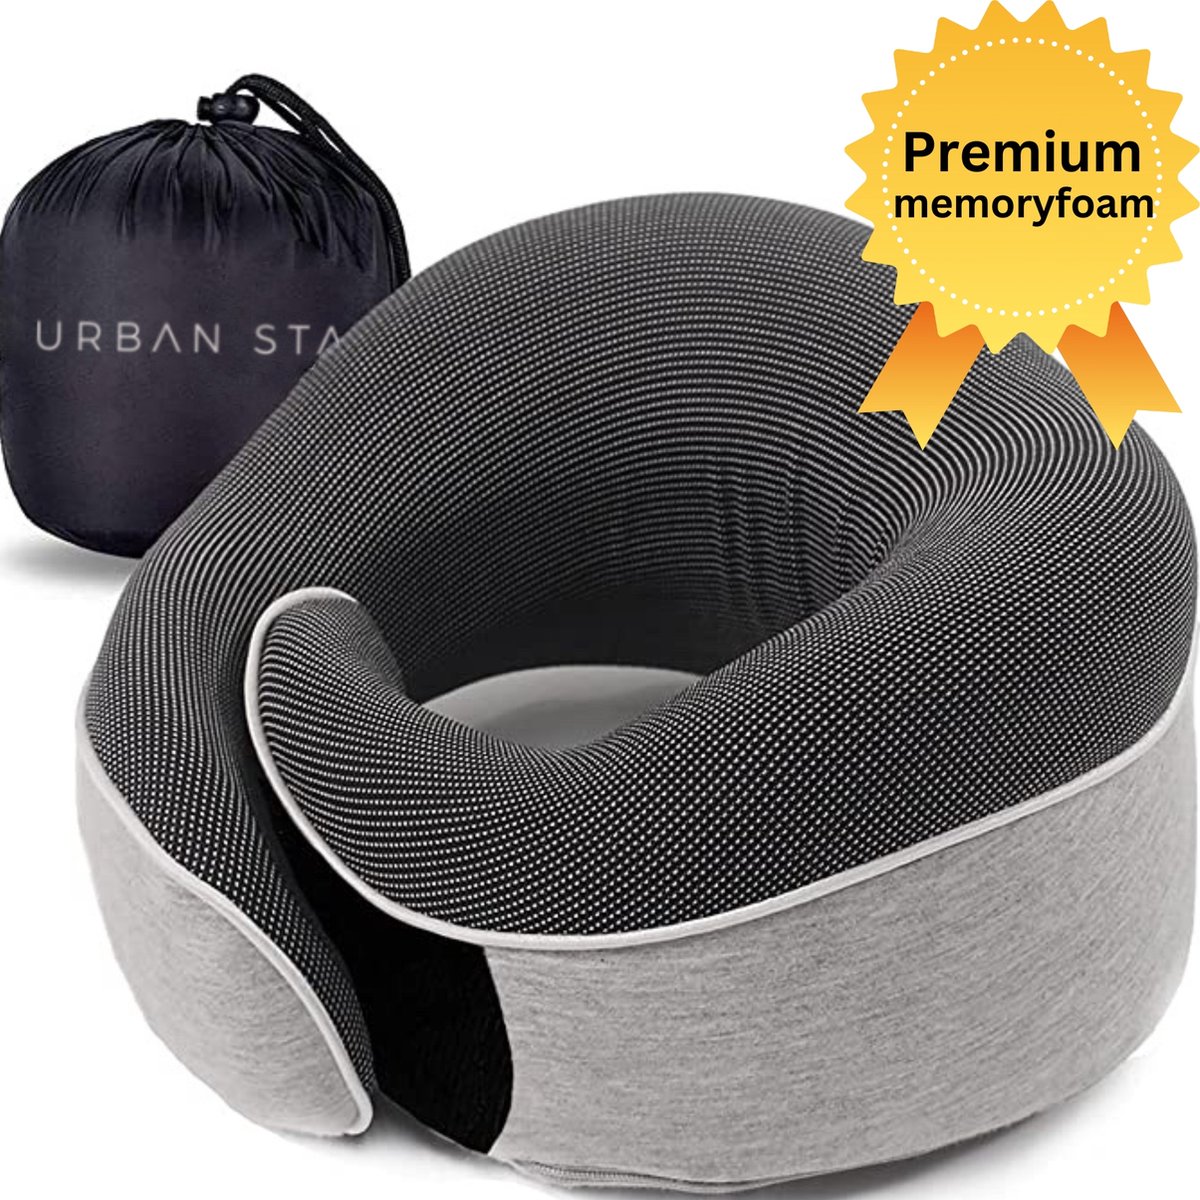 Nekkussen vliegtuig / auto - reiskussen - premium traagschuim - ergonomisch nekkussen - travel pillow - memmory foam - Urban State